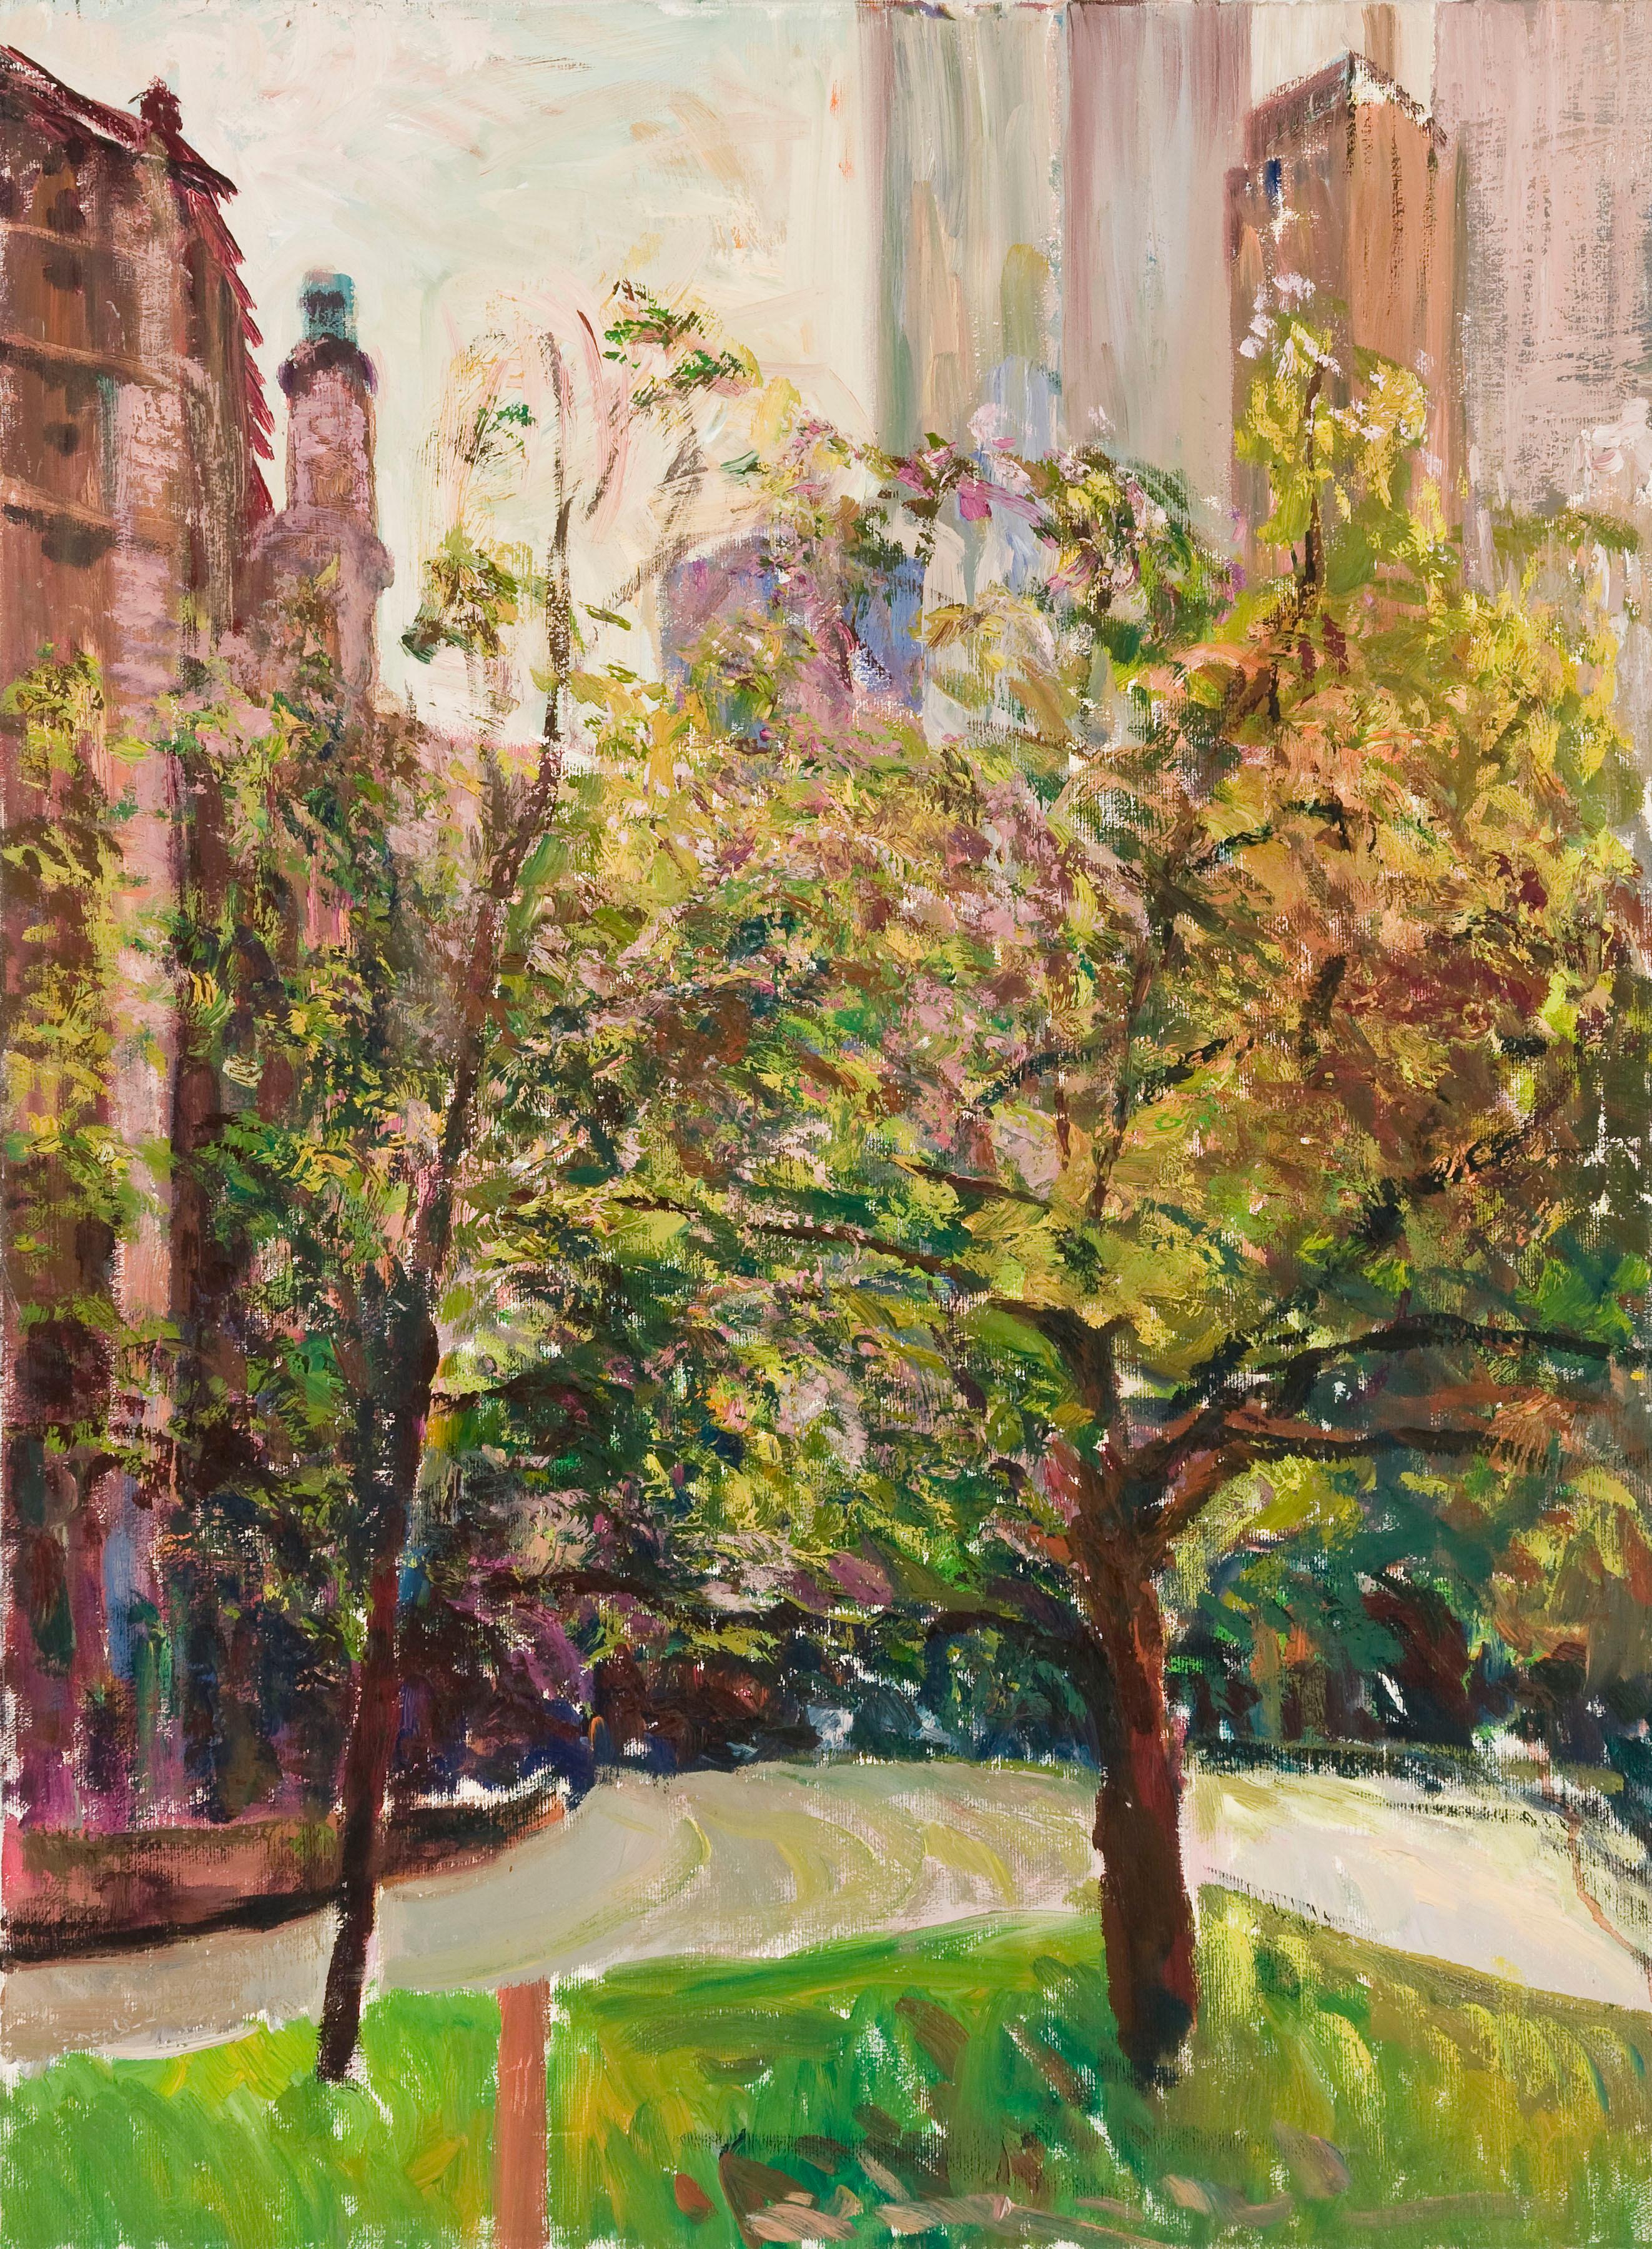 Julie Cottler
Central Park, New York City, 1990s
oil on canvas
28x21 cm

